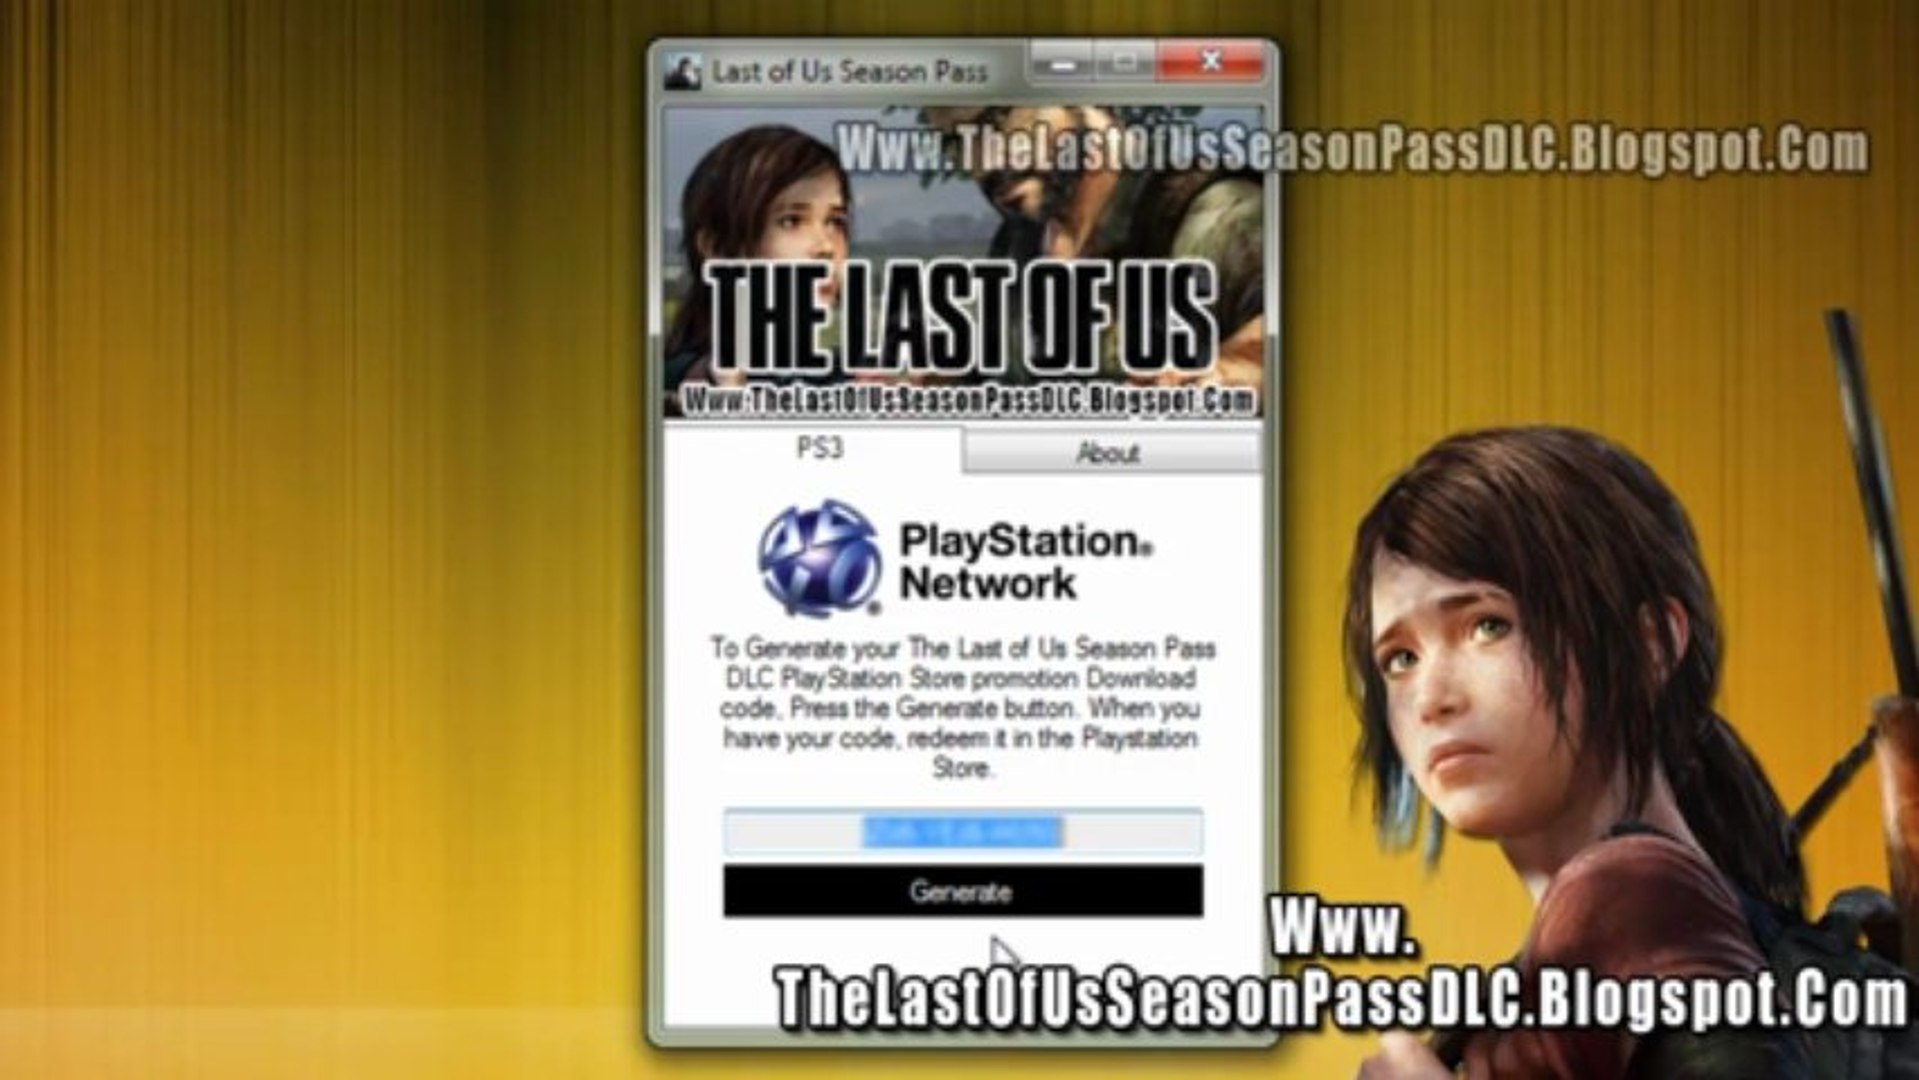 Unlock The Last of Us Season Pass DLC Code Free! - video Dailymotion